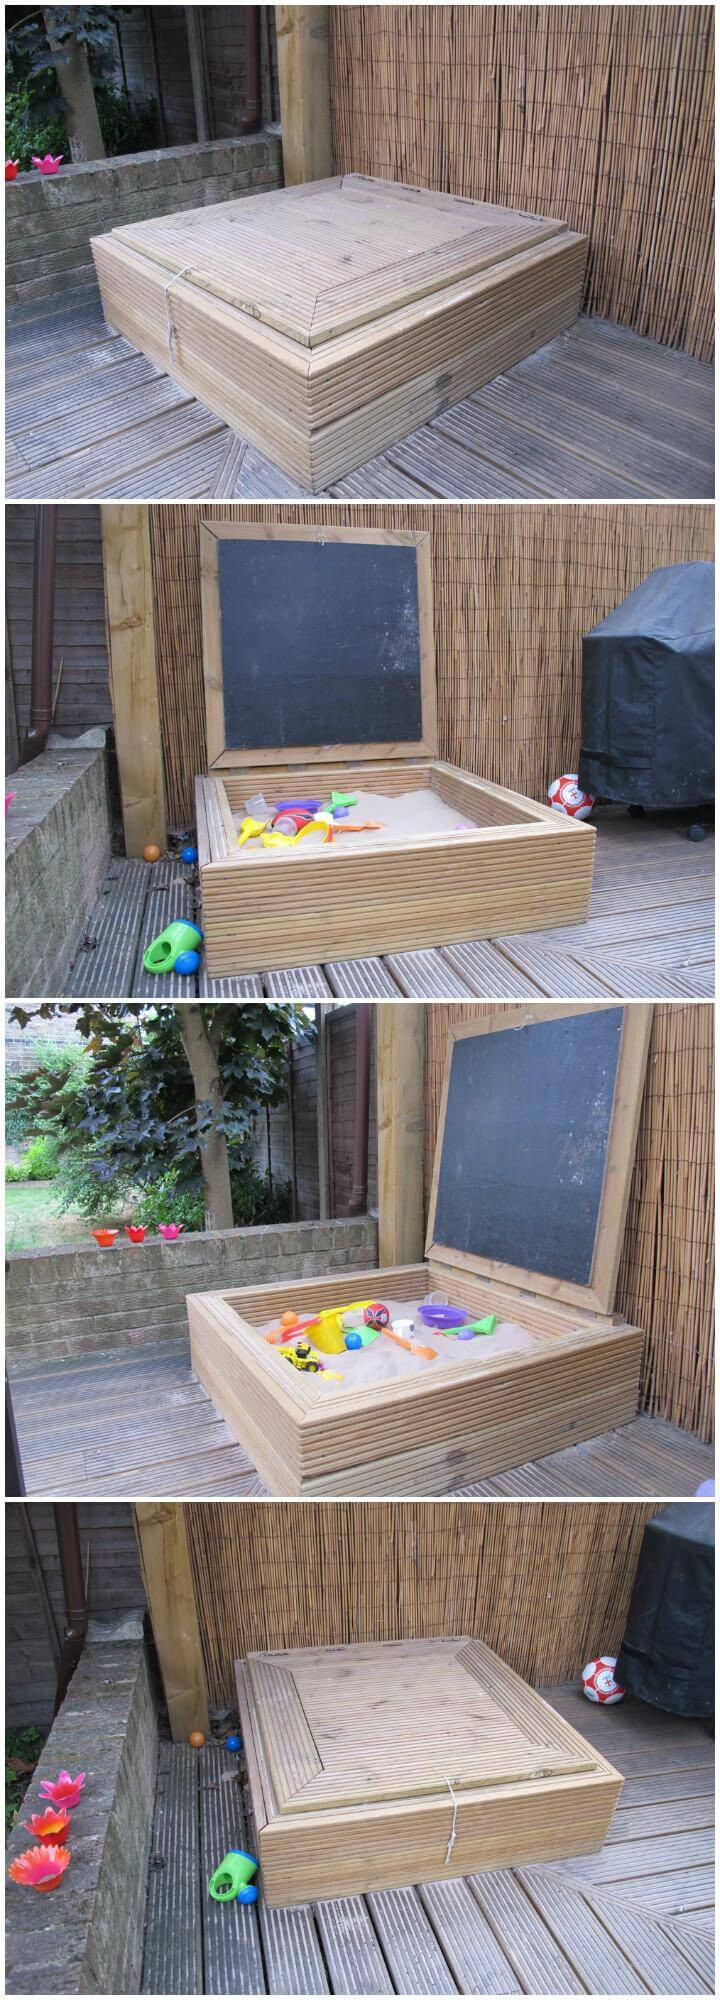 DIY Wooden Sandbox
 60 DIY Sandbox Ideas and Projects for Kids ⋆ DIY Crafts